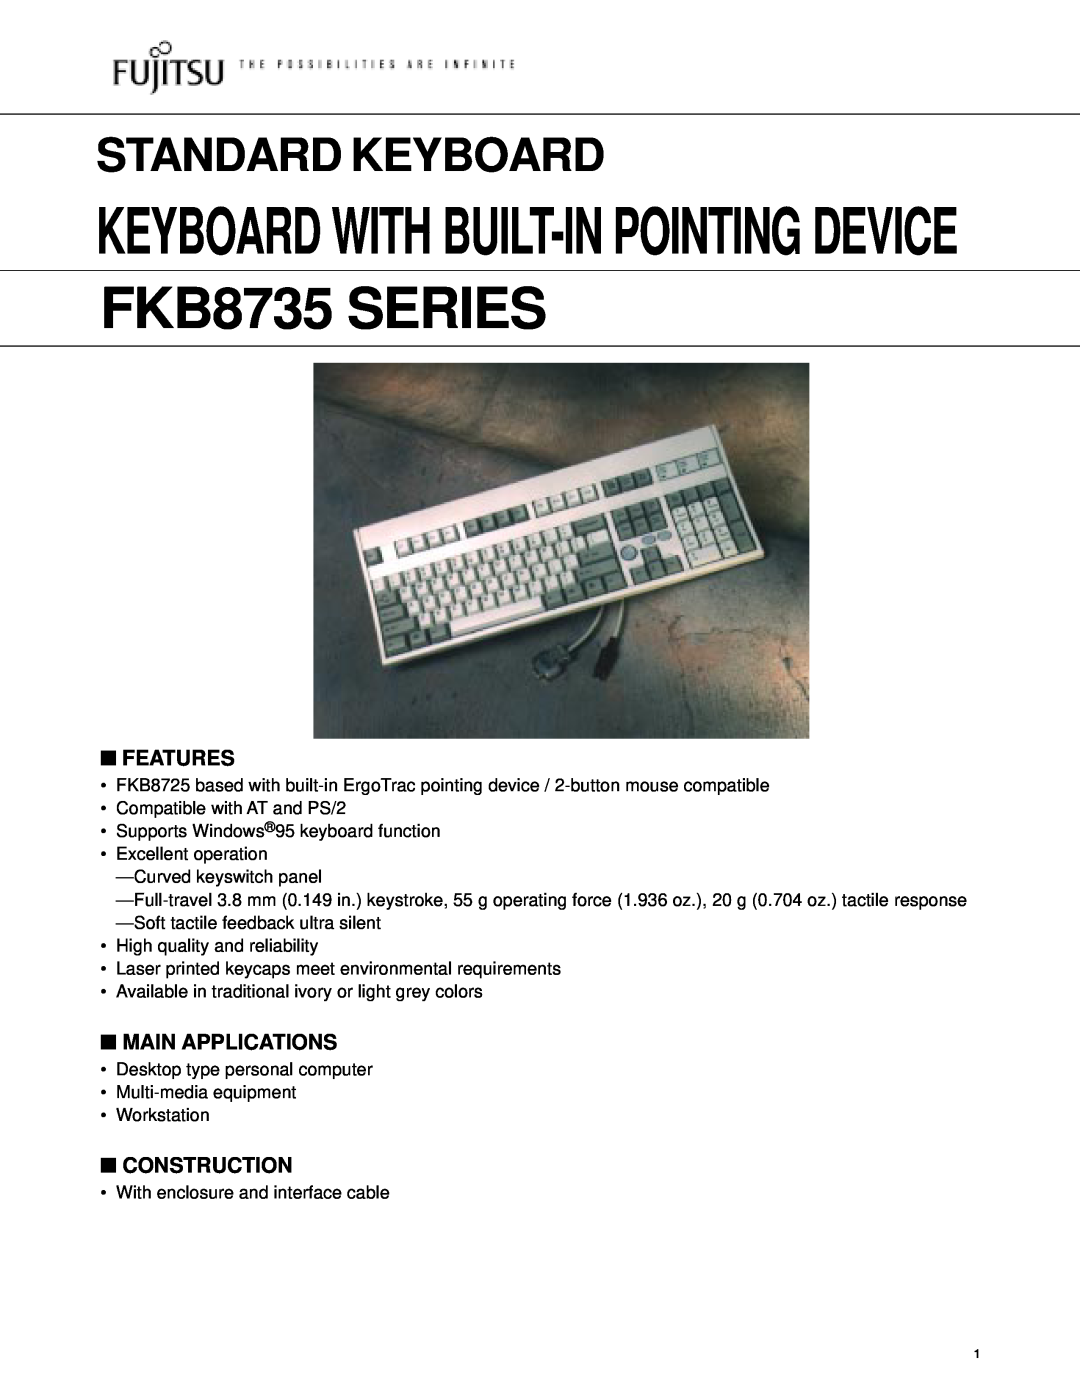 Fujitsu FKB8735 Series manual Features, Main Applications, Construction, FKB8735 SERIES, Standard Keyboard 